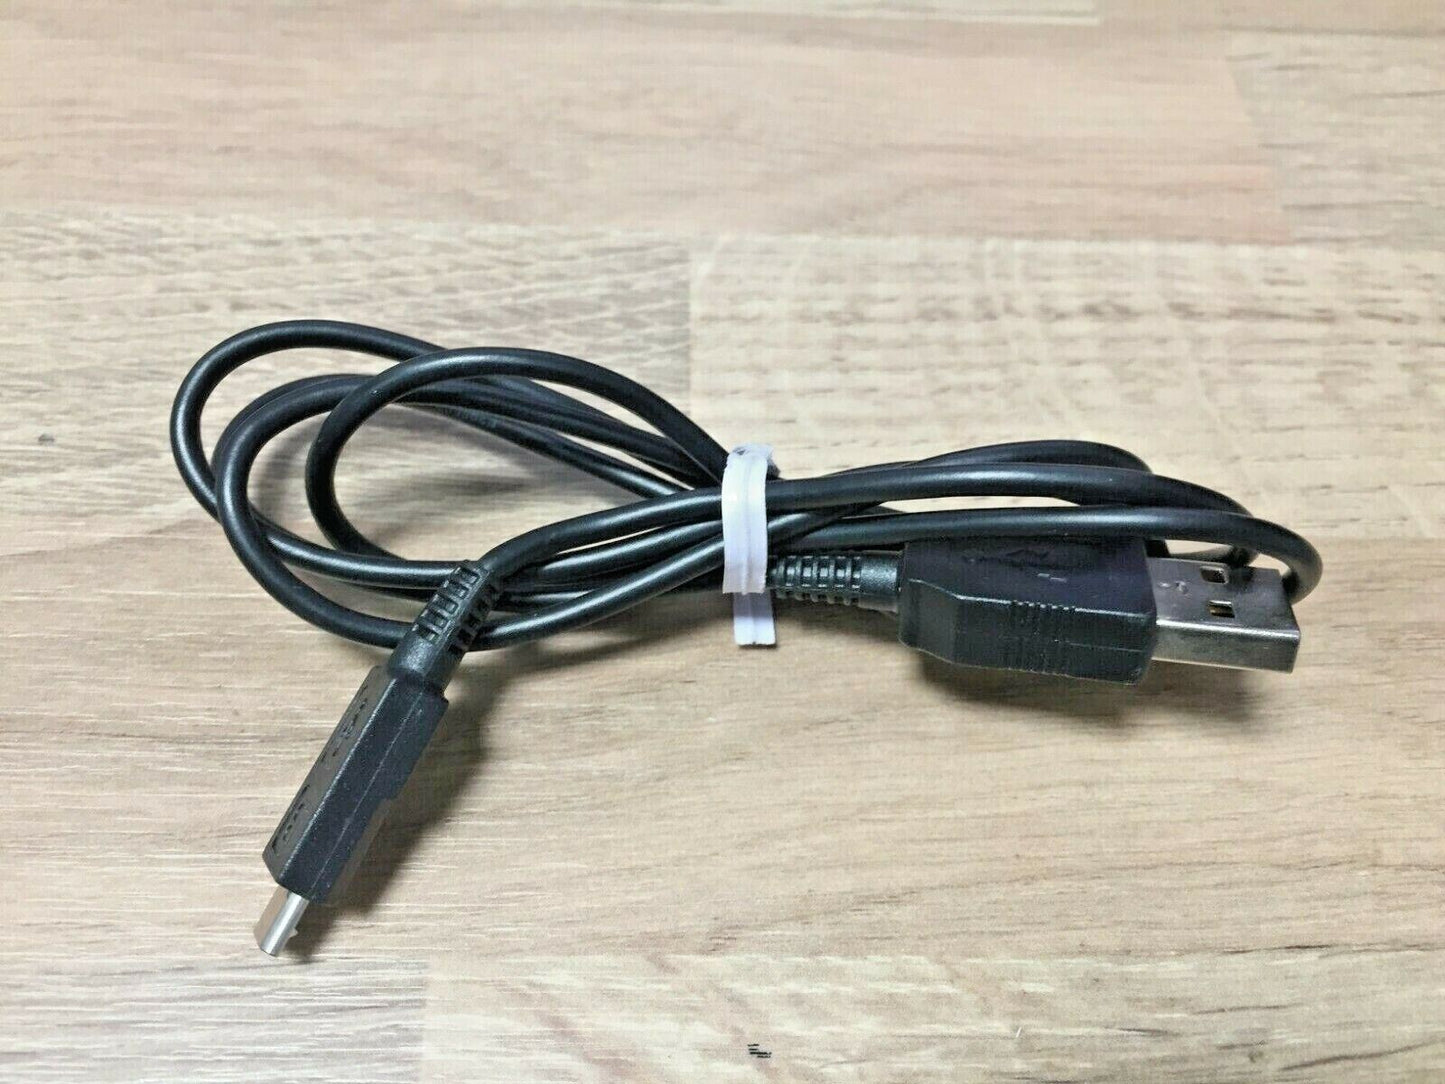 Sony NWE394 Walkman 8GB Portable Stereo Sound LCD LED MP3 Player USB FM AM Radio